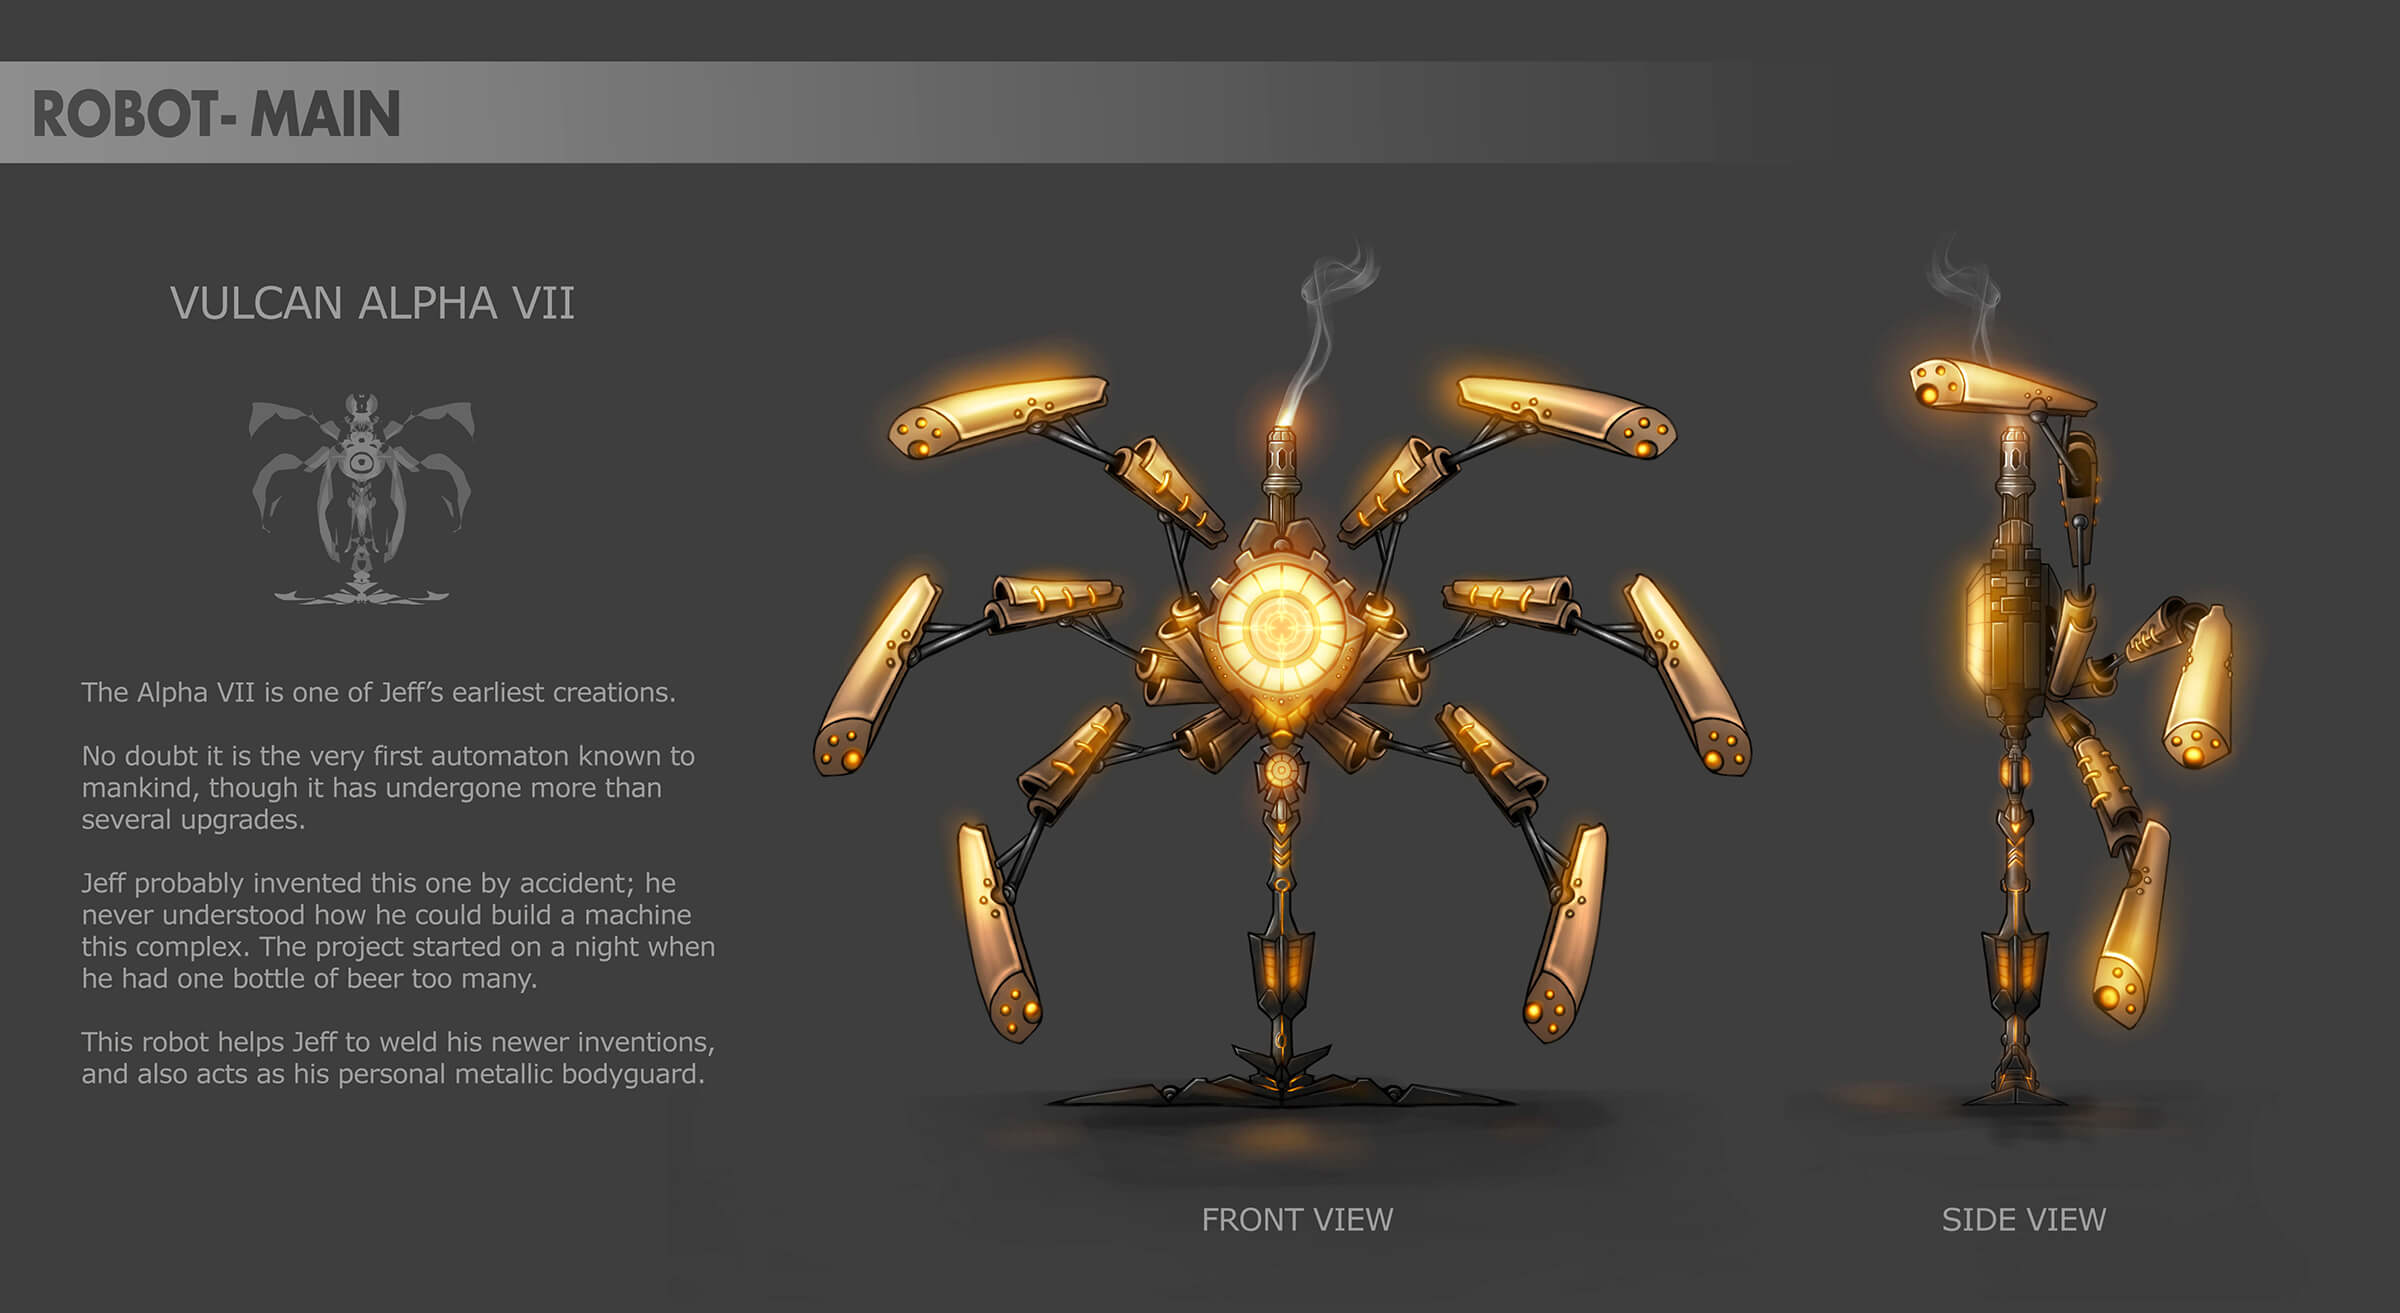 Concept art of a multi-legged golden robot resembling an upright spider, along with name "Vulcan Alpha VII" and description.